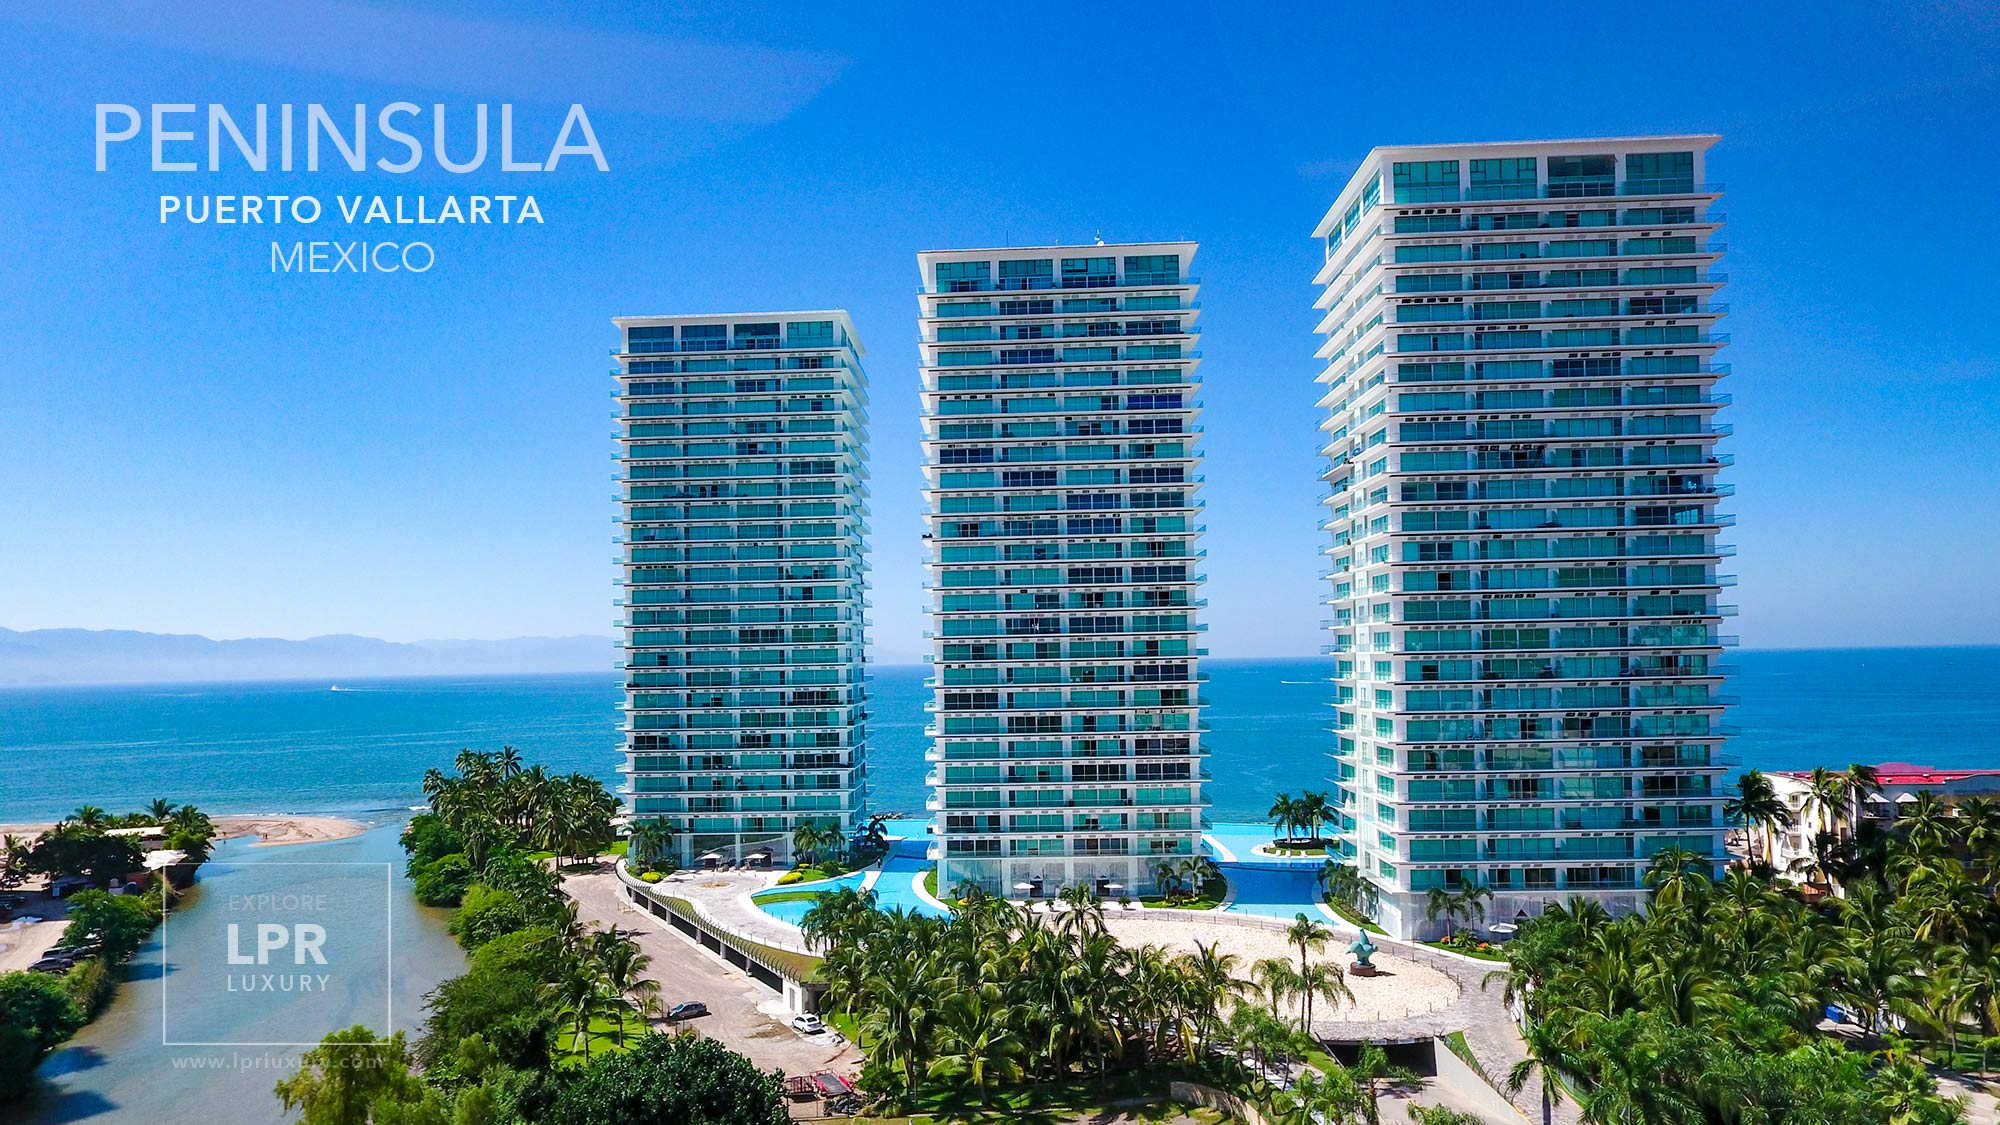 Peninsula Puerto Vallarta - Luxury condominiums for sale and rent - beachfront real estate condos and vacation rentals